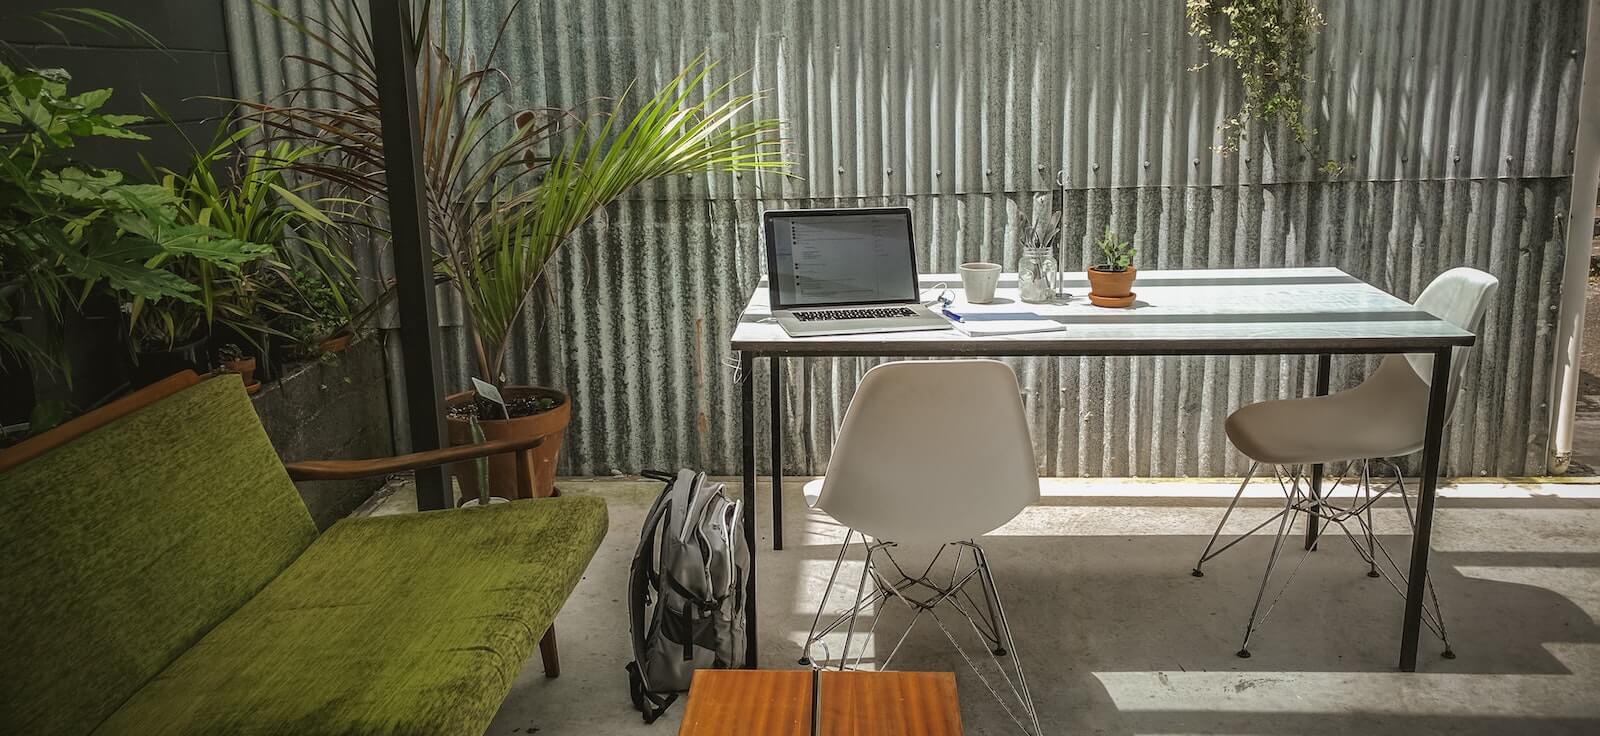 Modern office interior design using texture